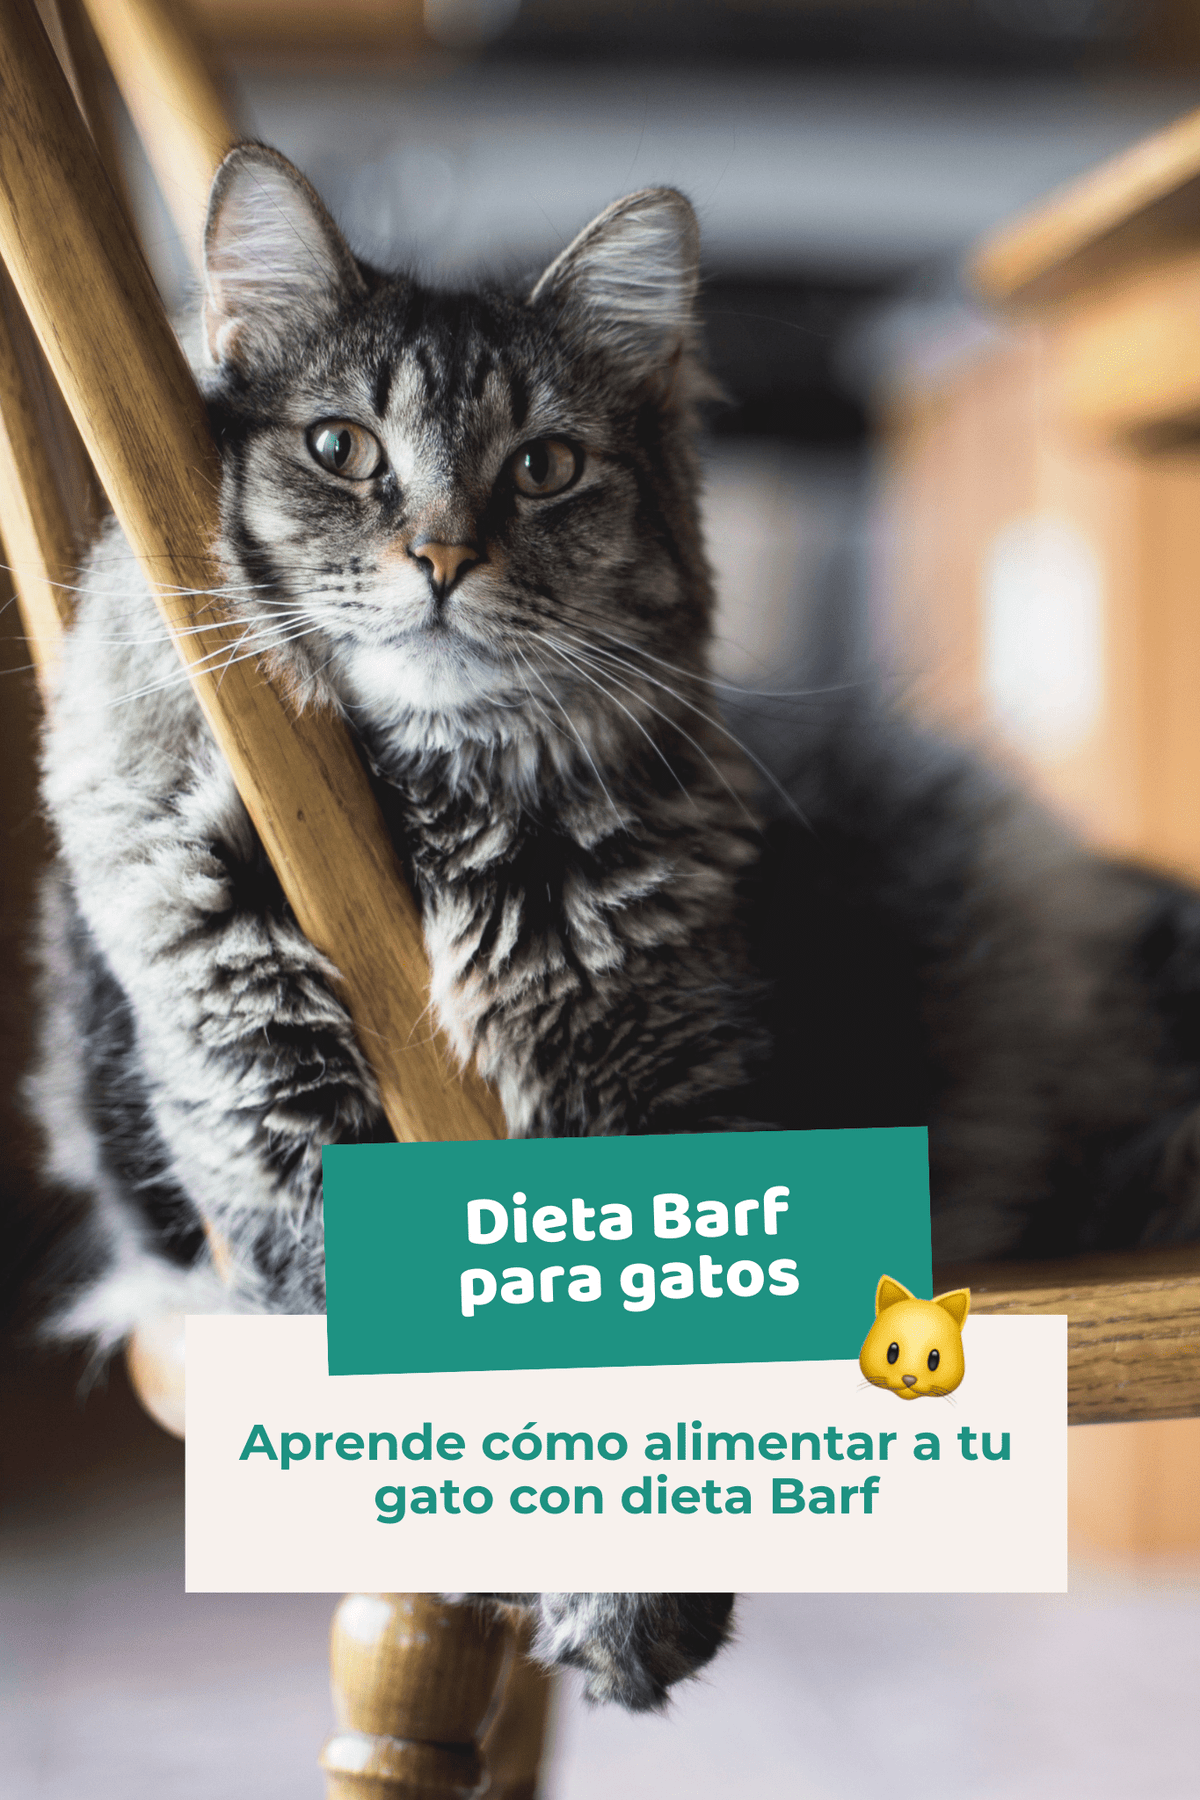 Ebook: Dieta Barf para gatos. Guía completa